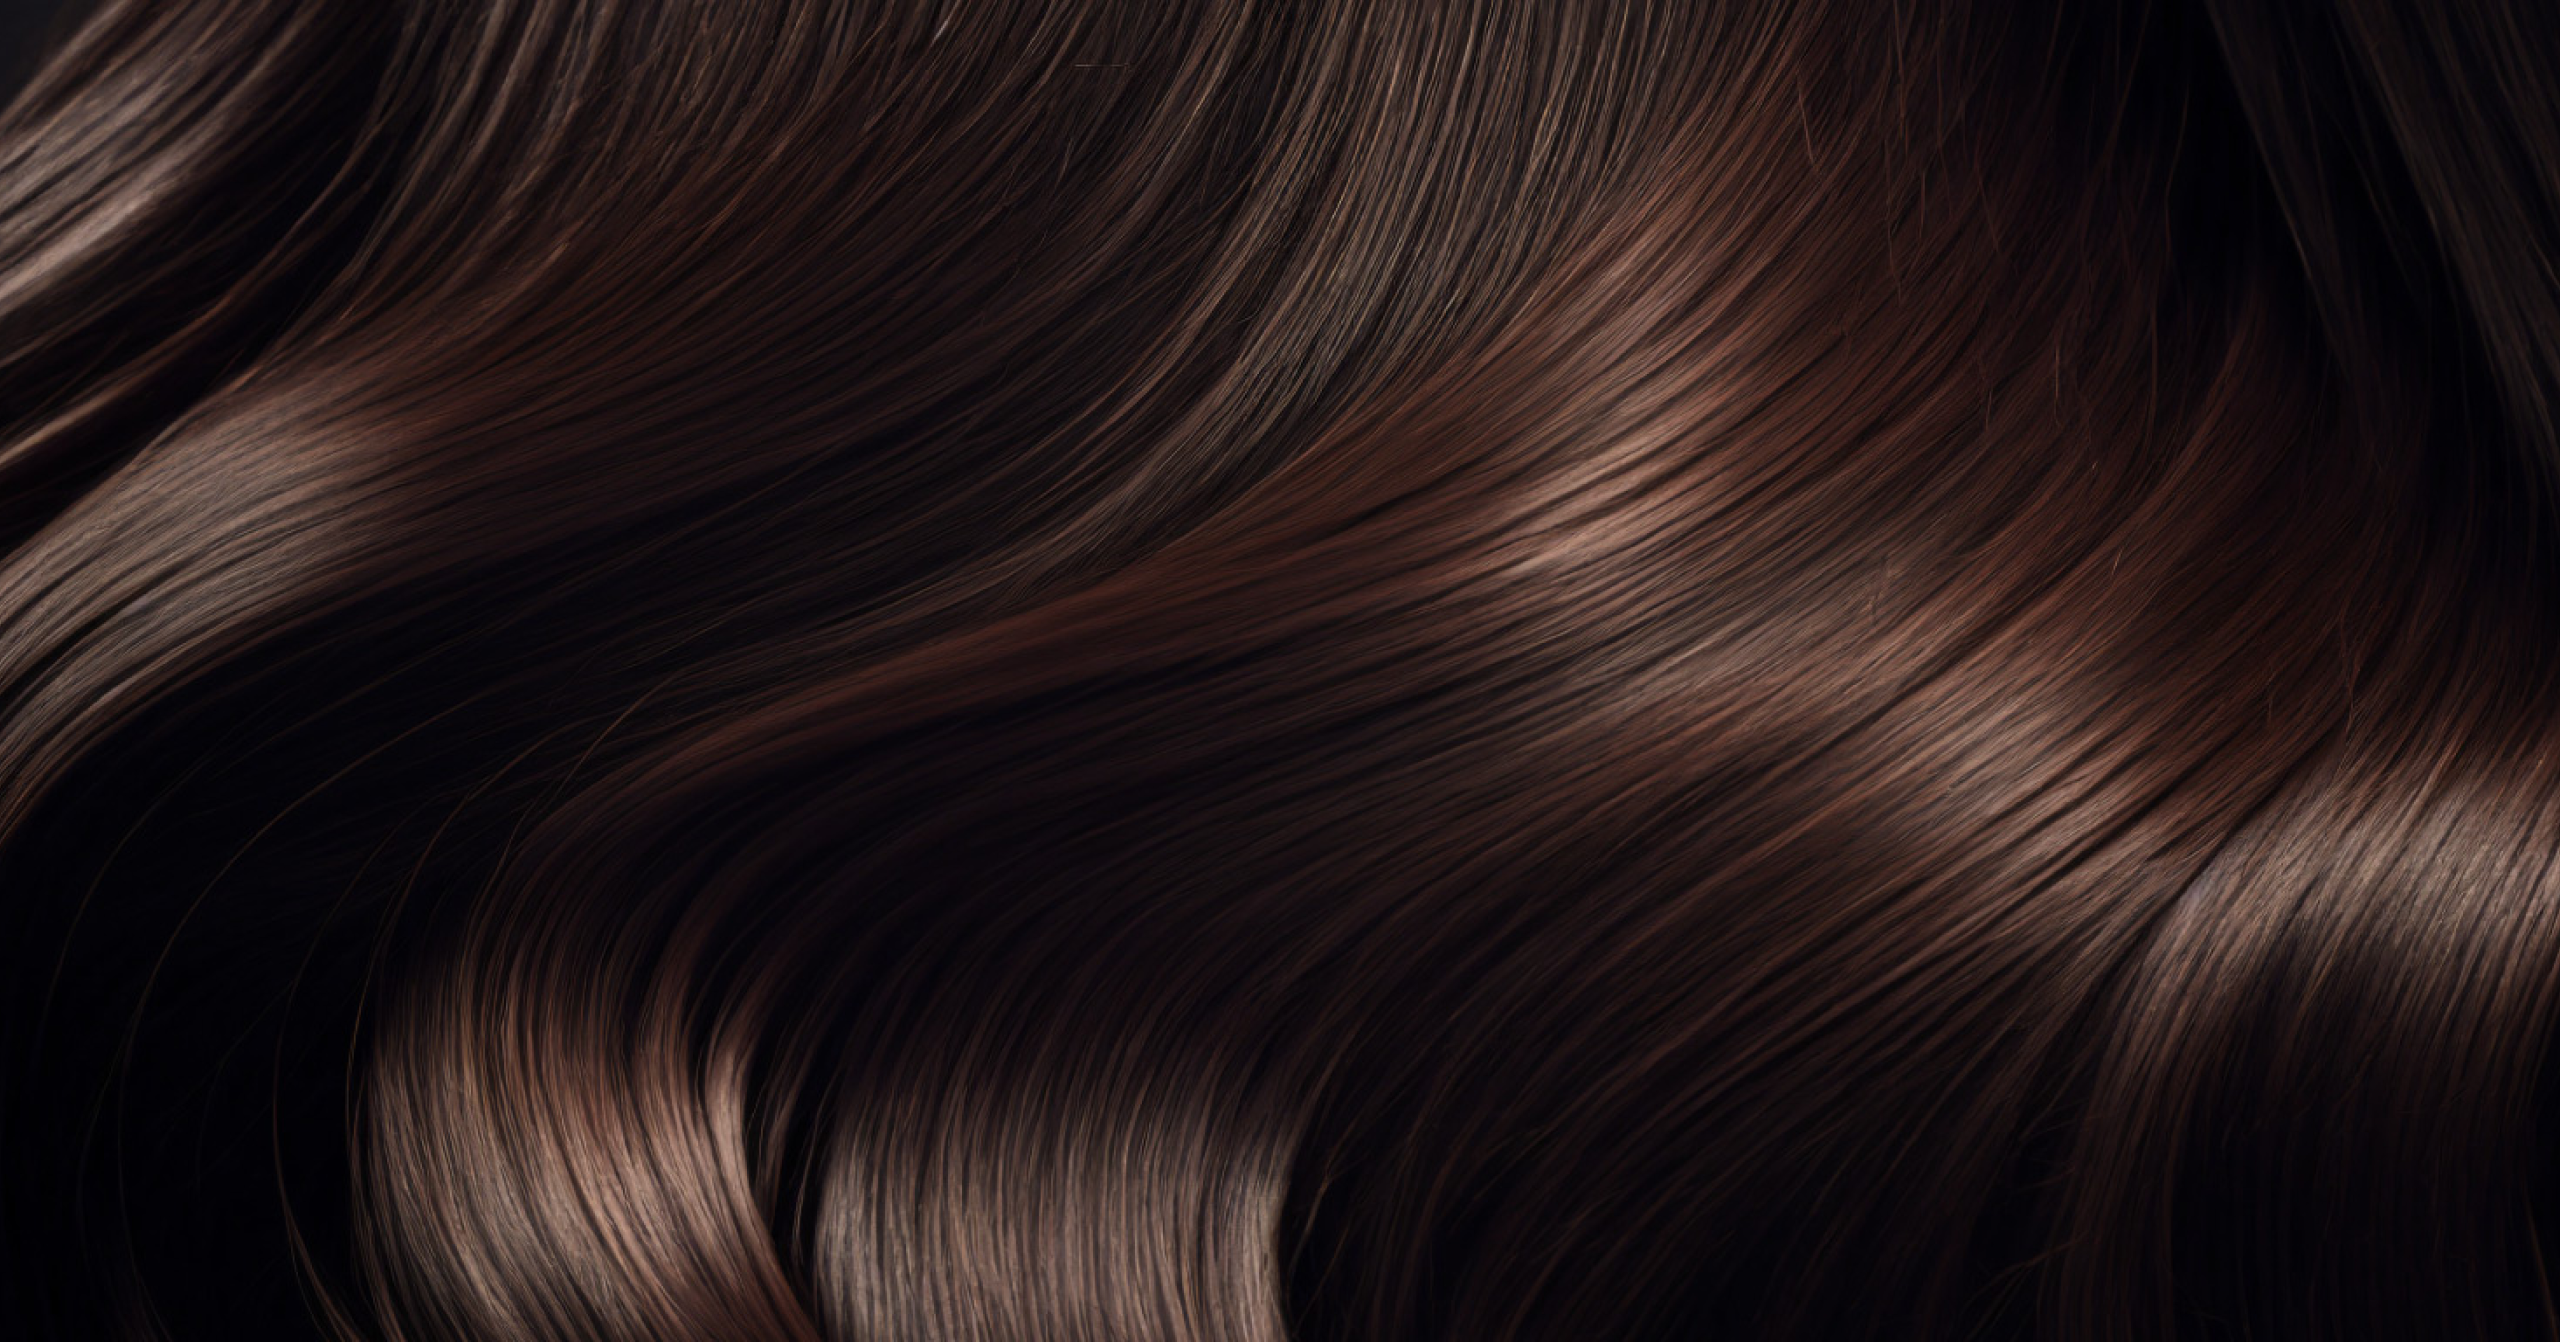 Close-up of dark brown wavy hair.